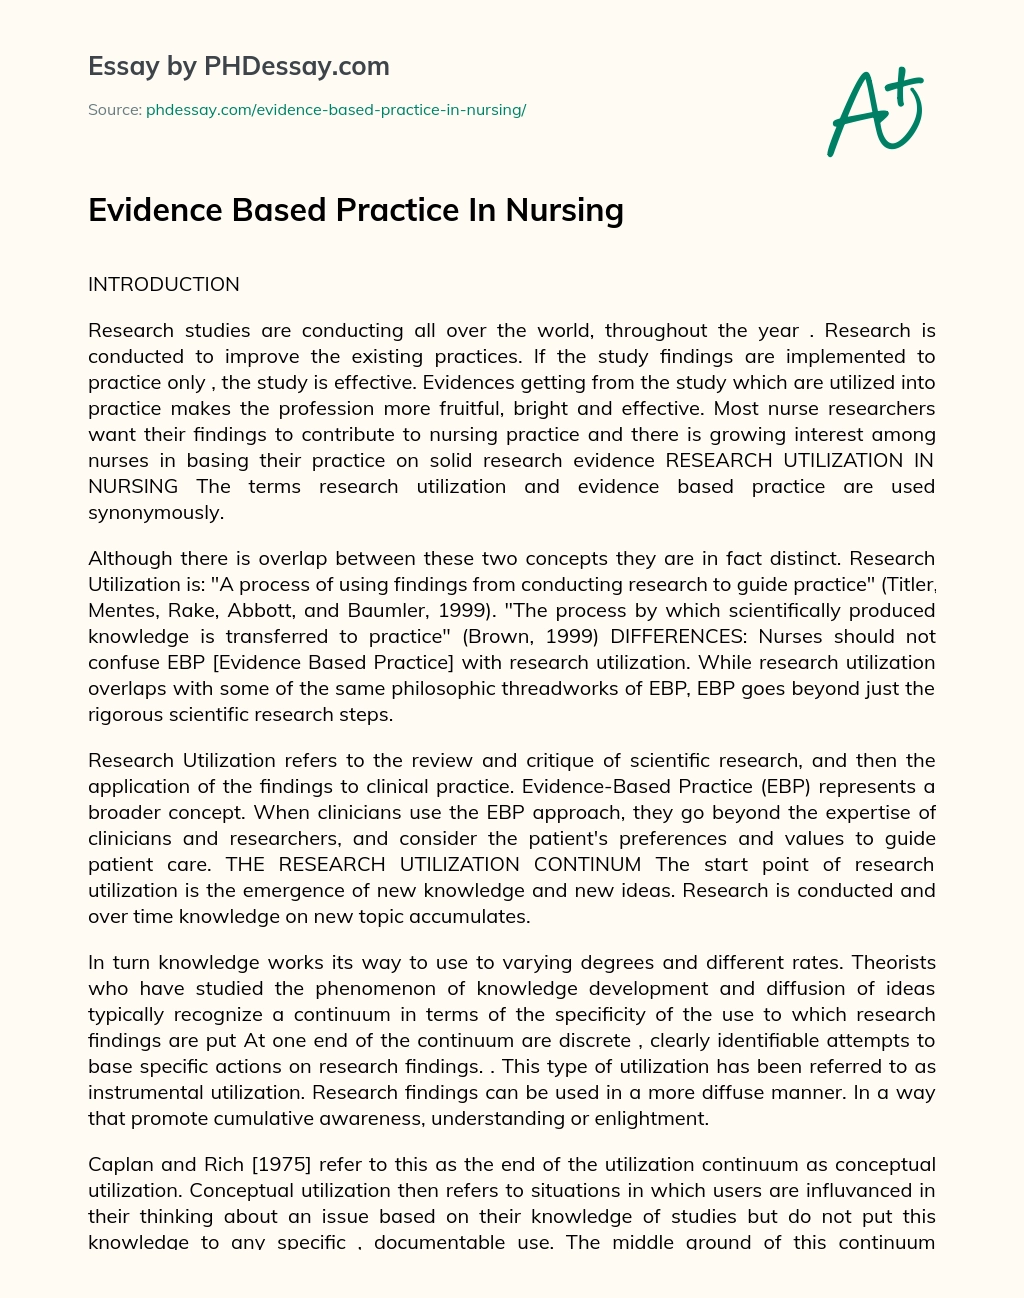 Evidence Based Practice In Nursing essay